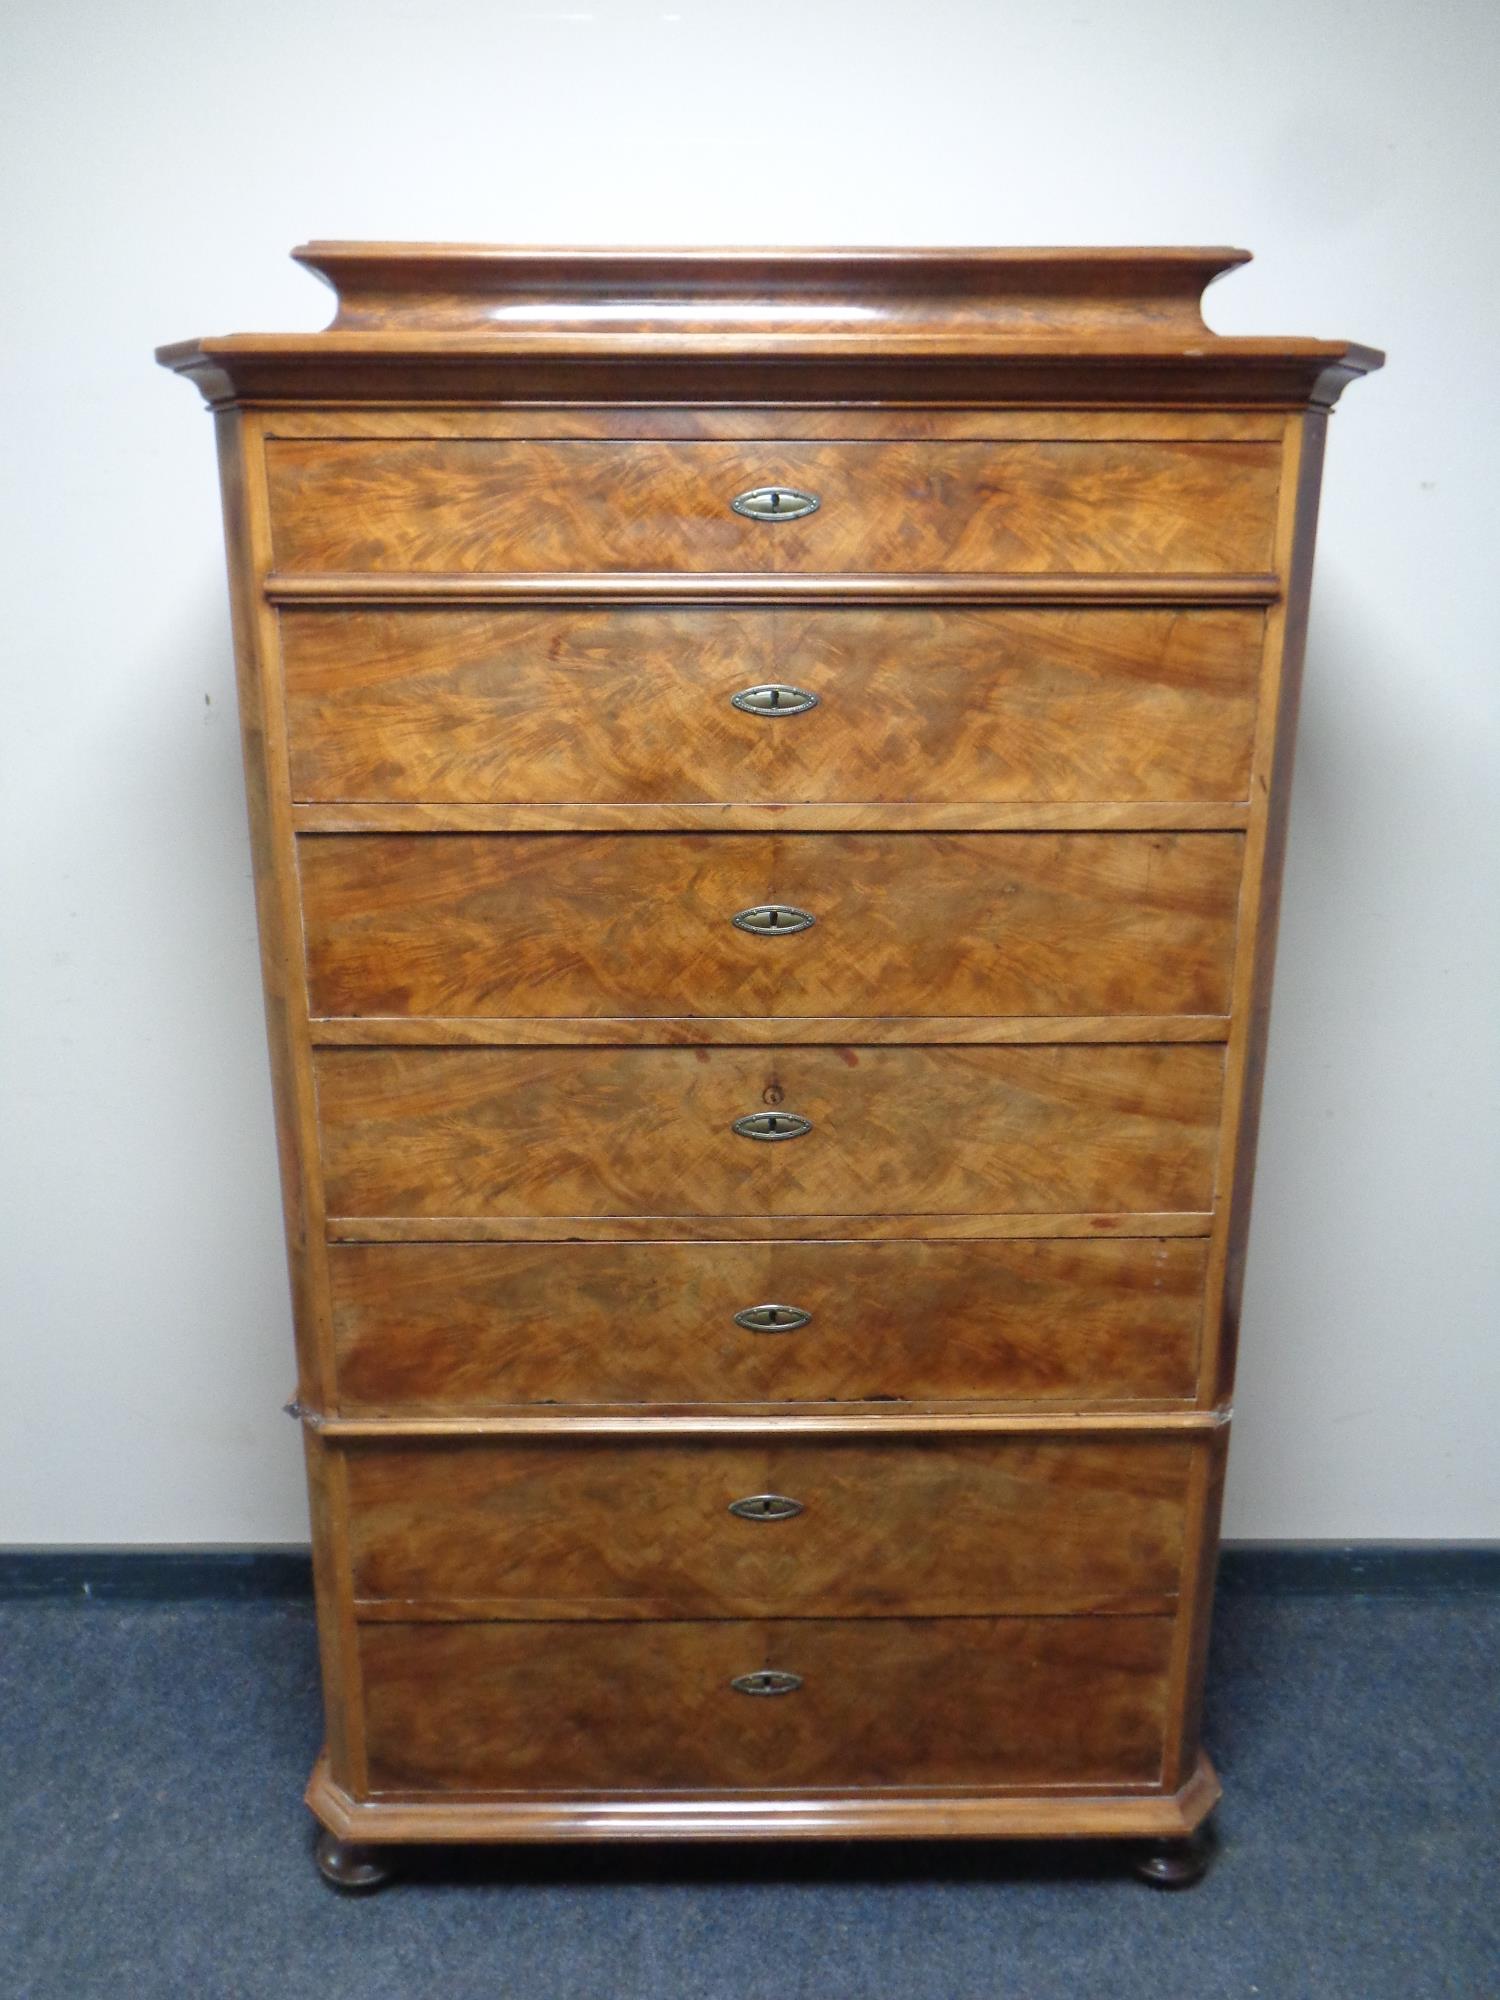 A 19th century mahogany seven drawer chest on bun feet